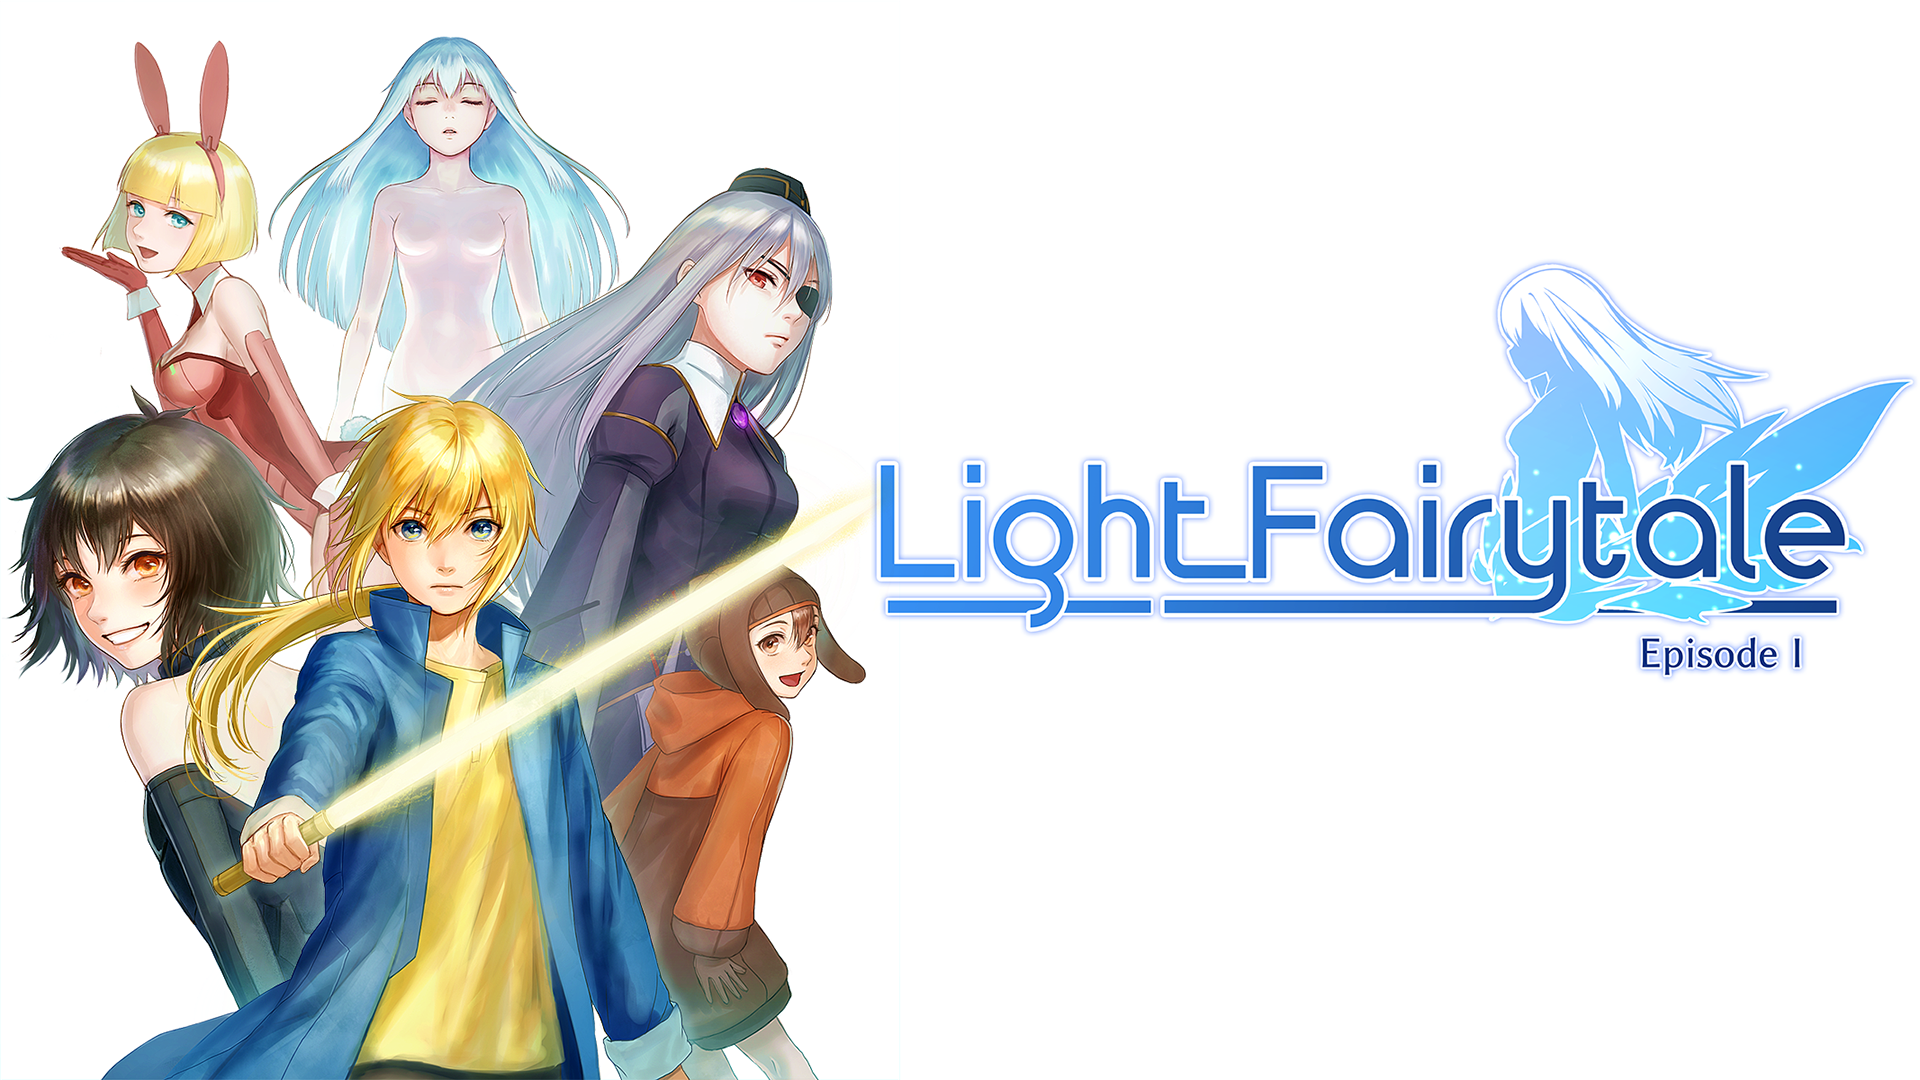 Light Fairytale Episode 1 